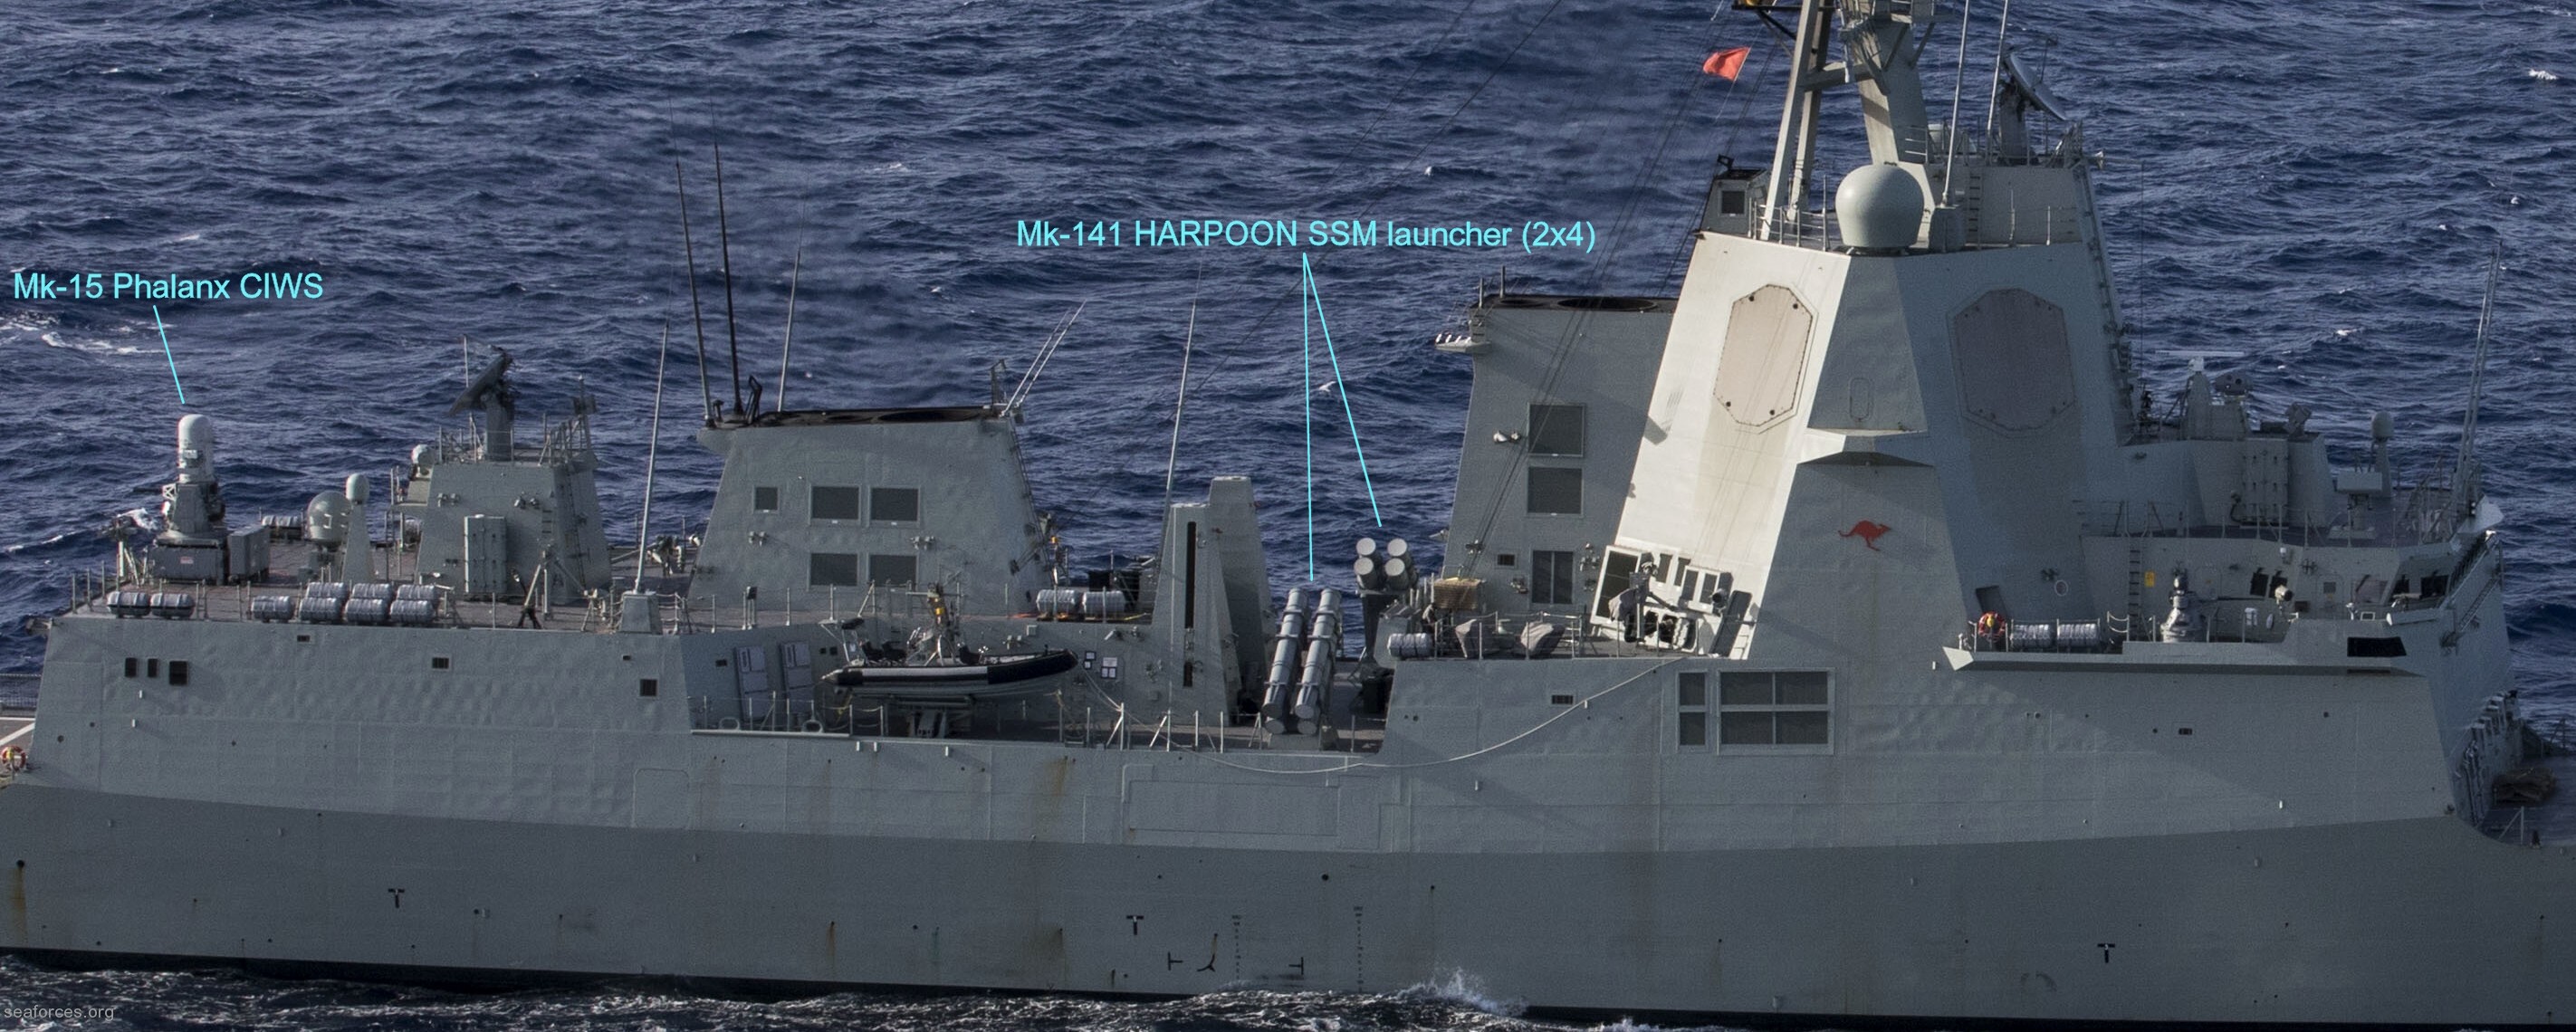 ddgh 39 hmas hobart class guided missile destroyer royal australian navy mk-15 ciws mk-141 rgm-84 harpoon ssm